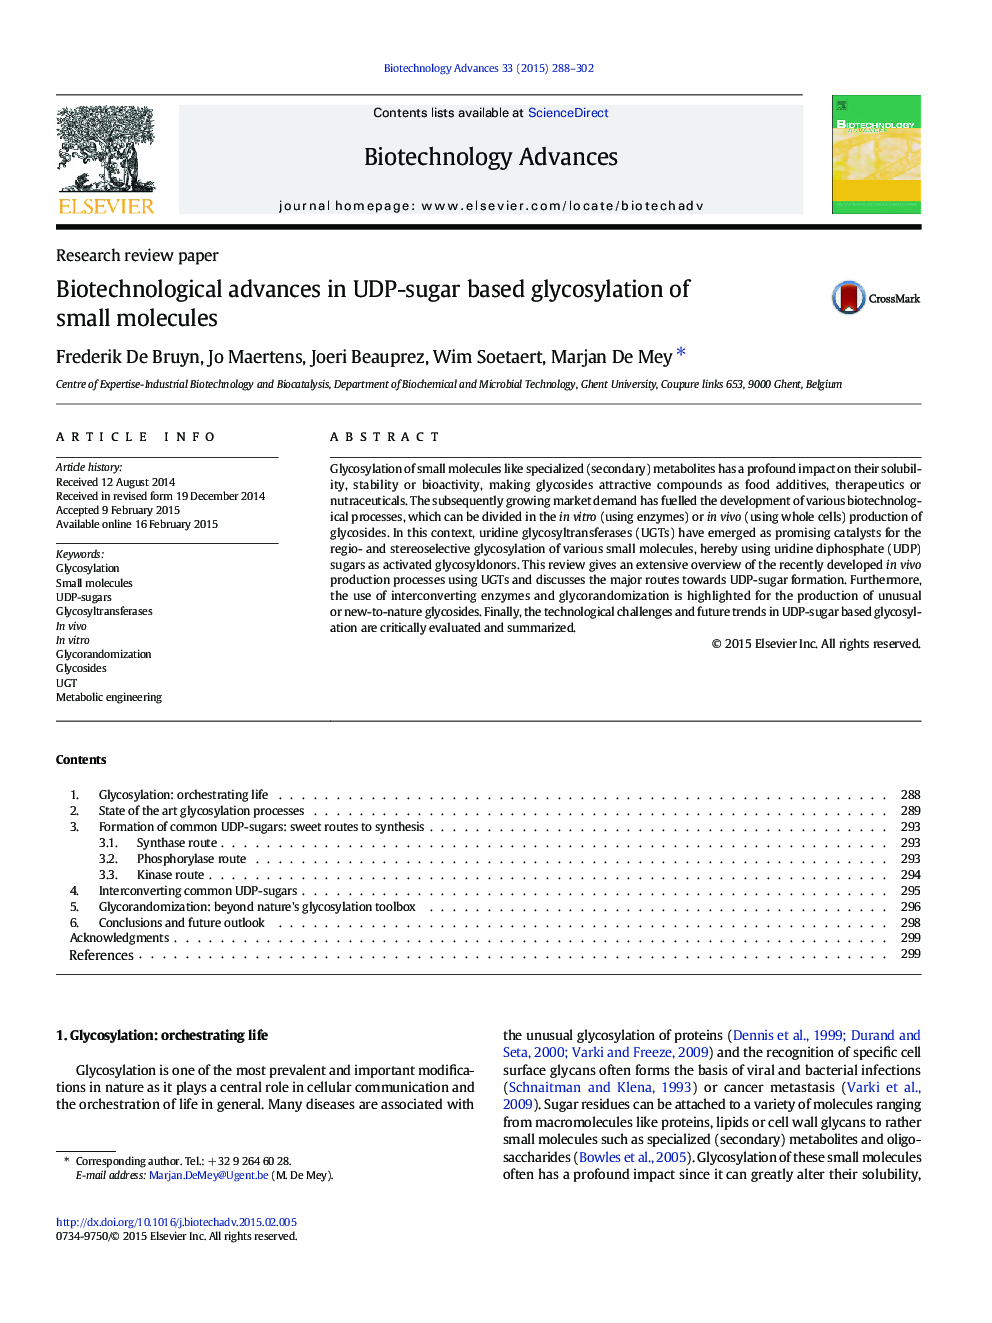 Biotechnological advances in UDP-sugar based glycosylation of small molecules